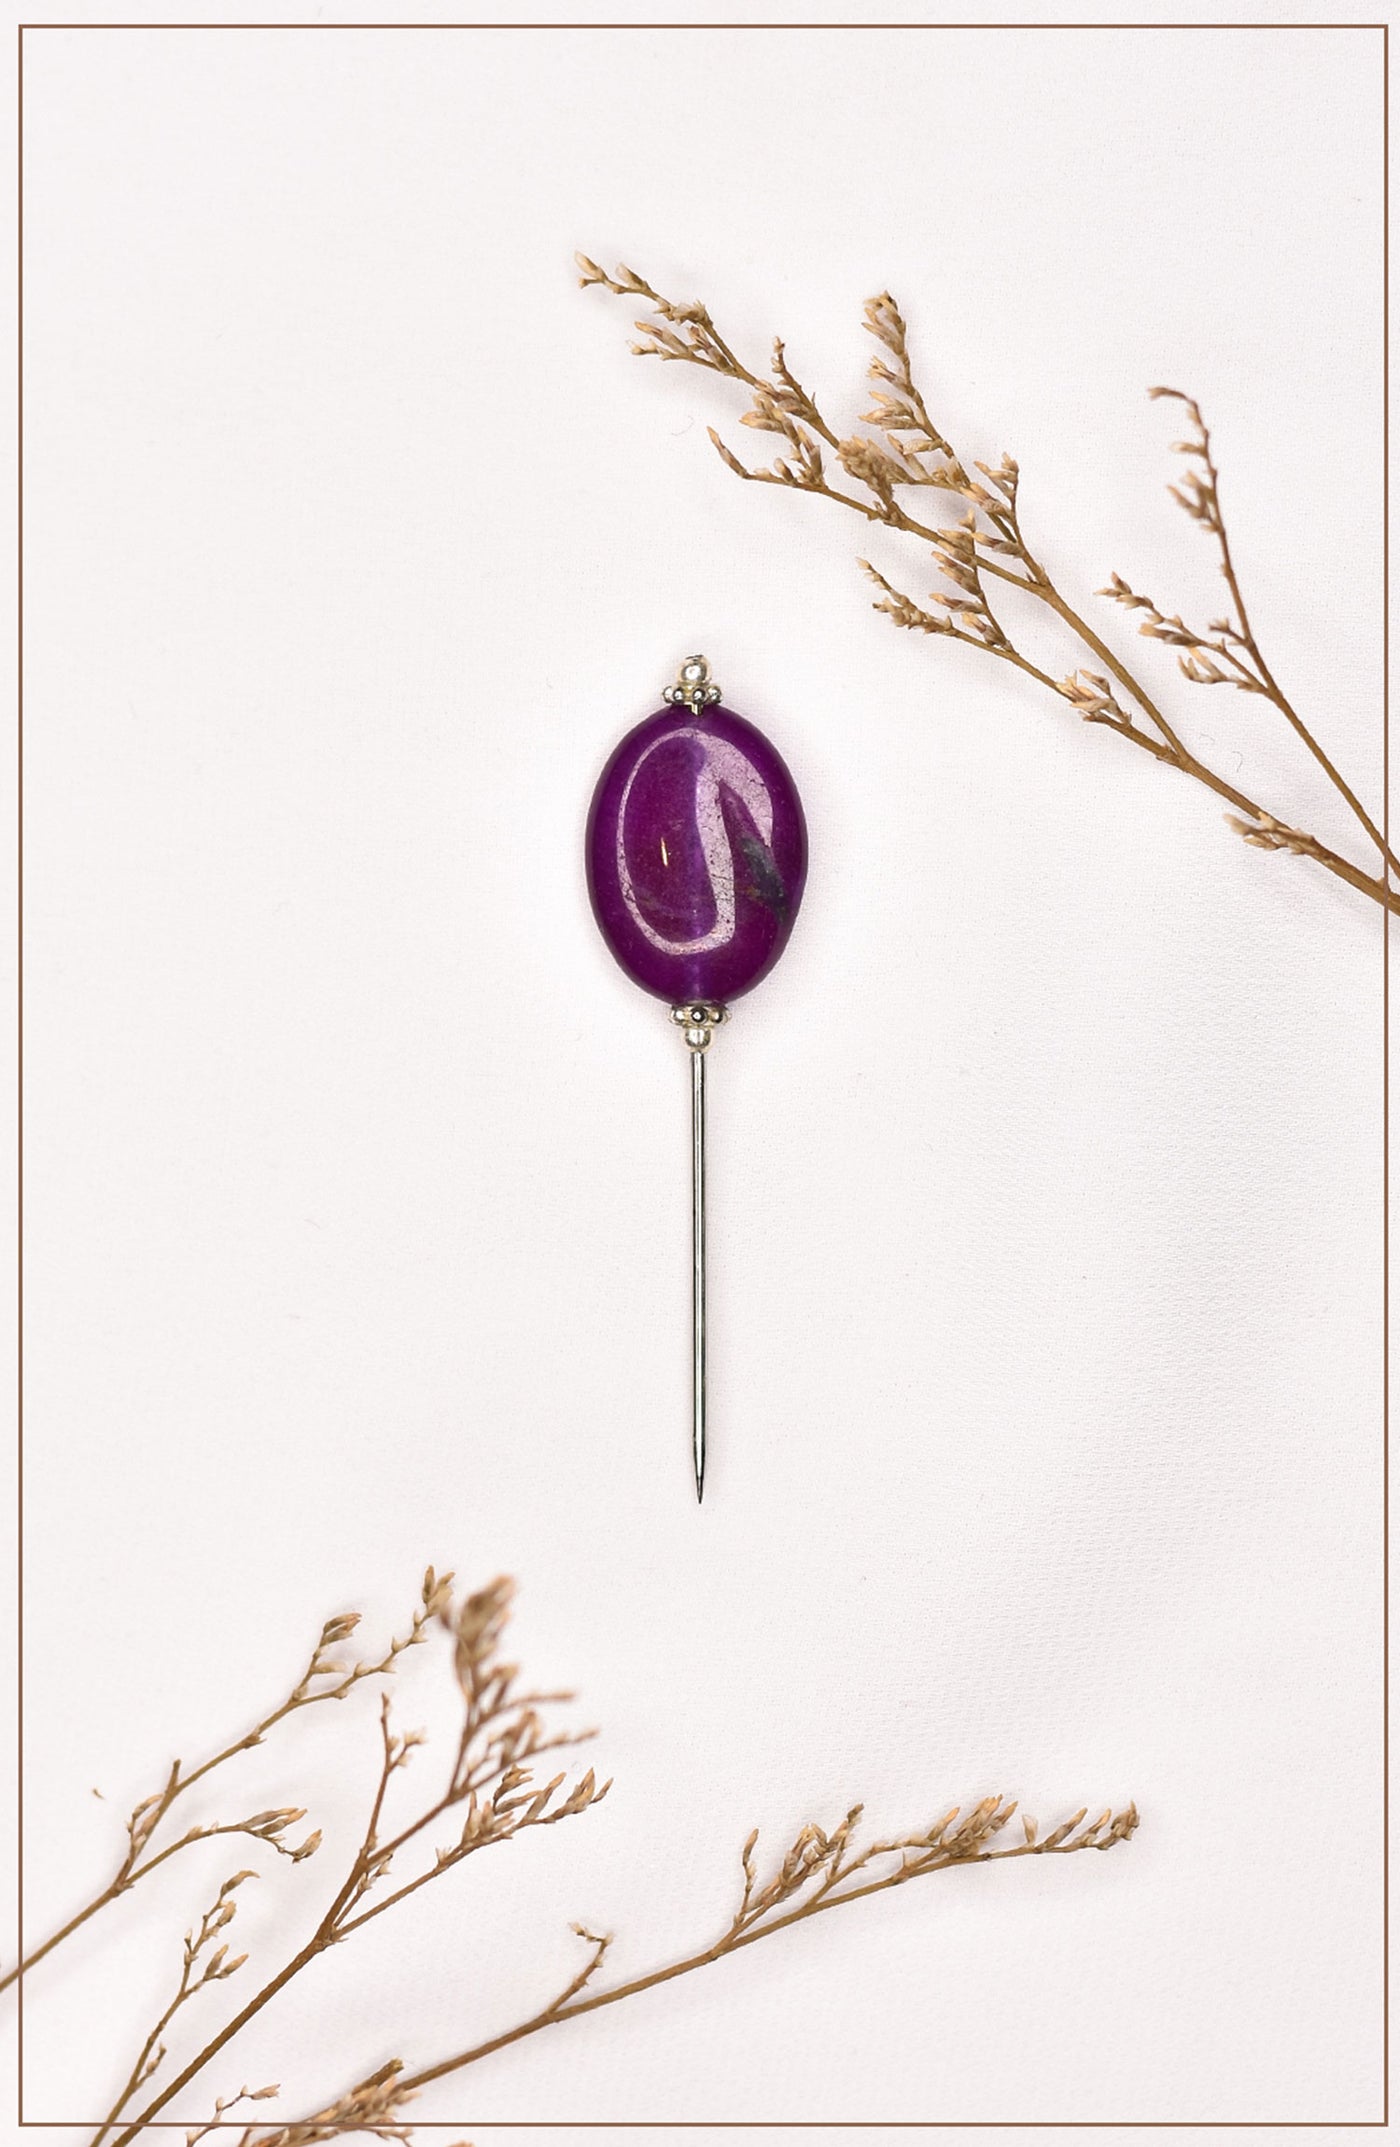 Lavender Crystal Hijab Pin